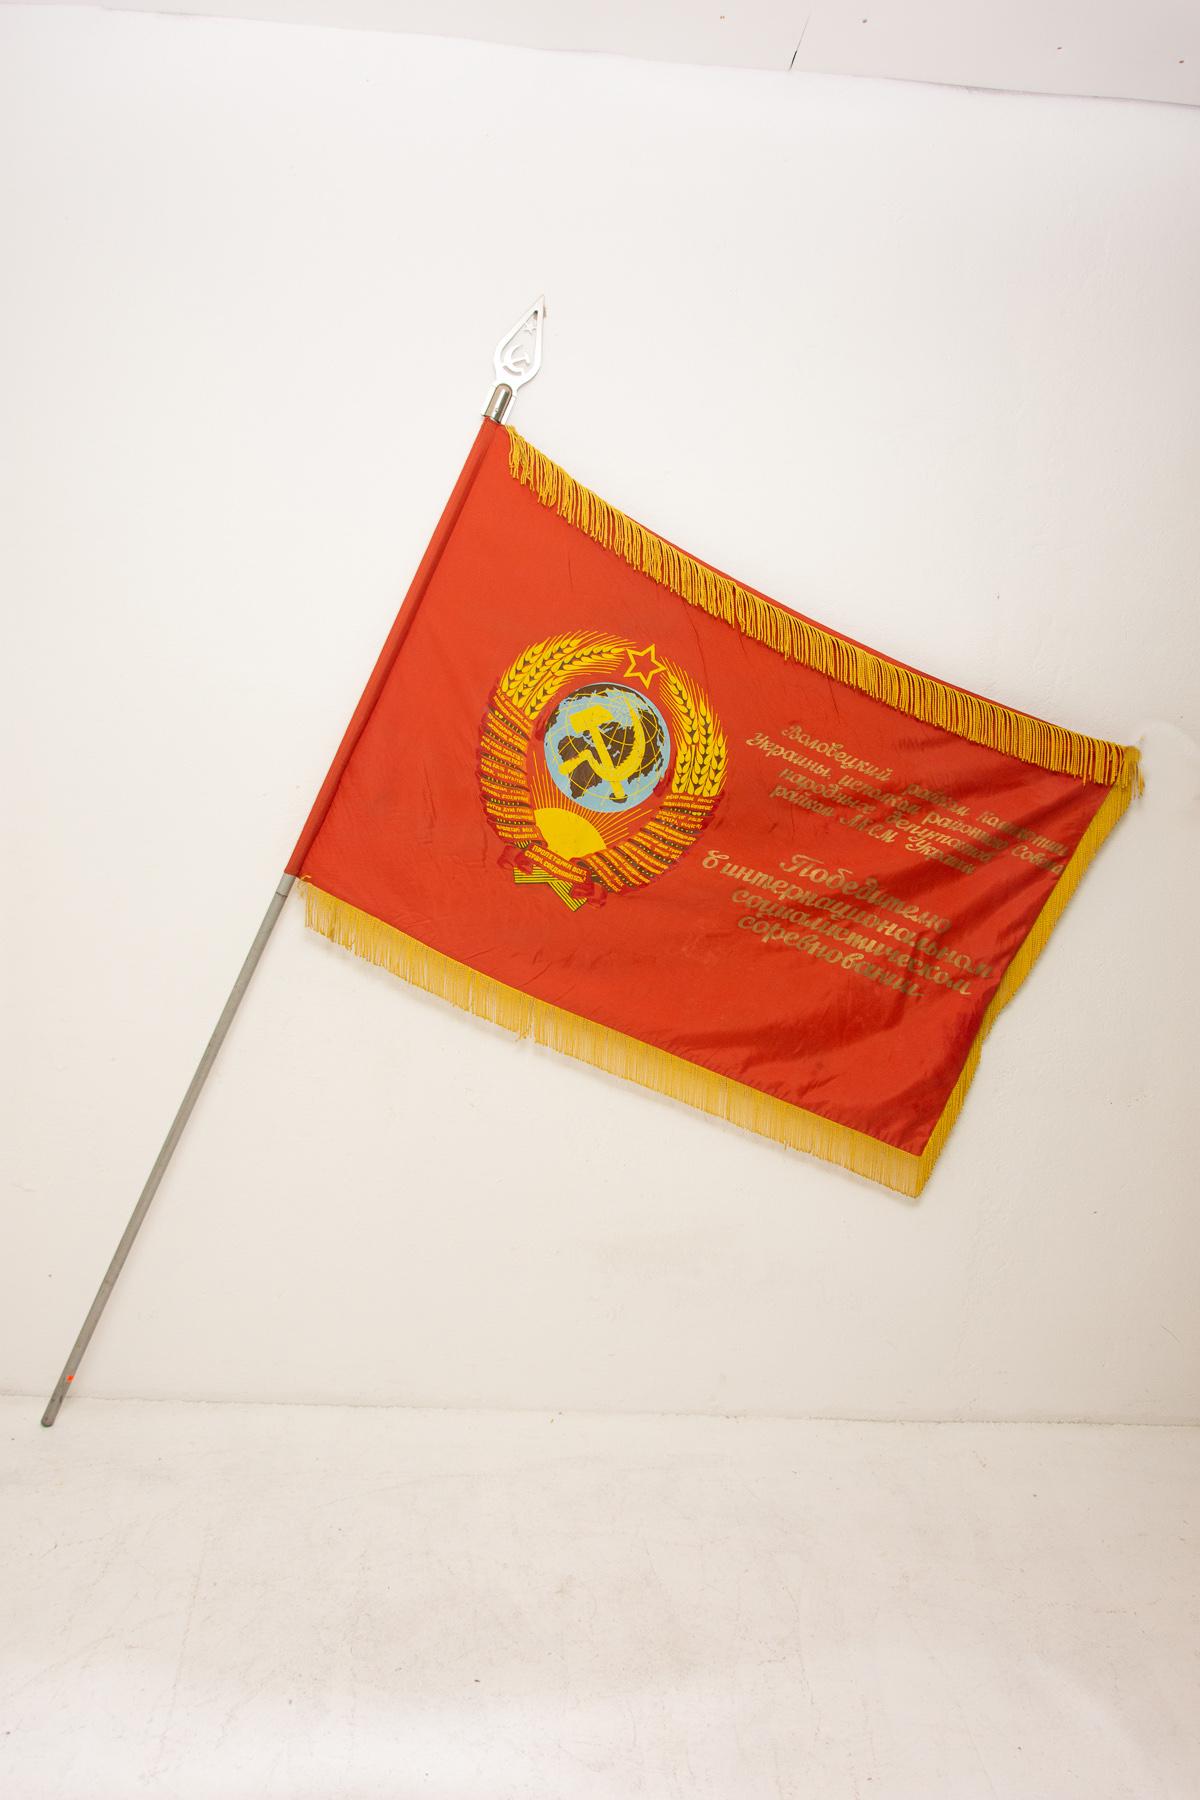 20th Century Communist Old Original Flag from 1950s with a Portrait of Vladimir Ilyich Lenin